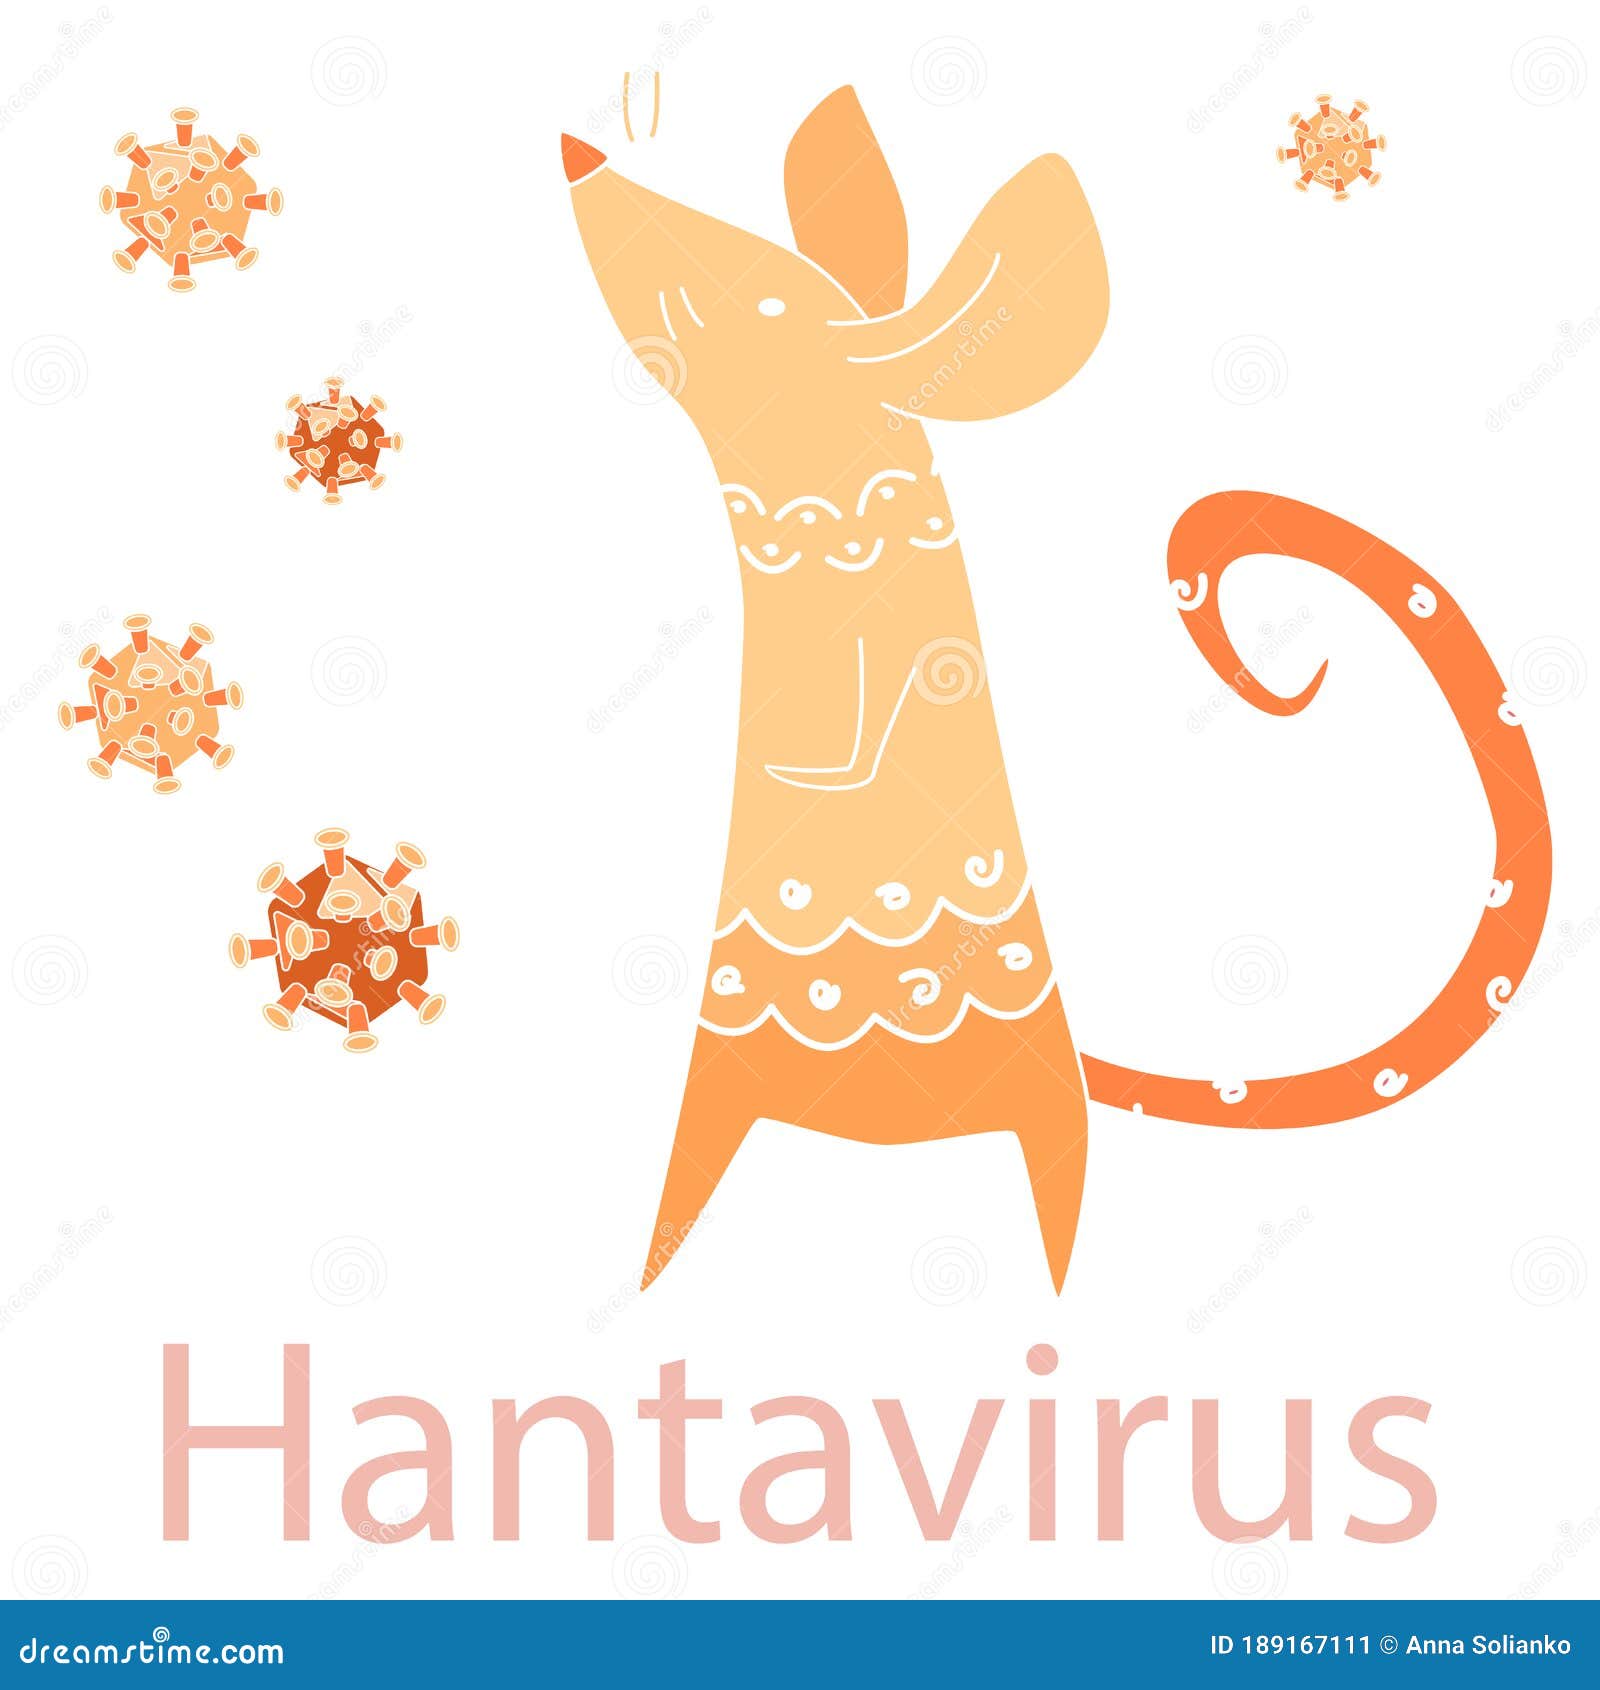 rat and hantavirus text on white  backdrop for social banner